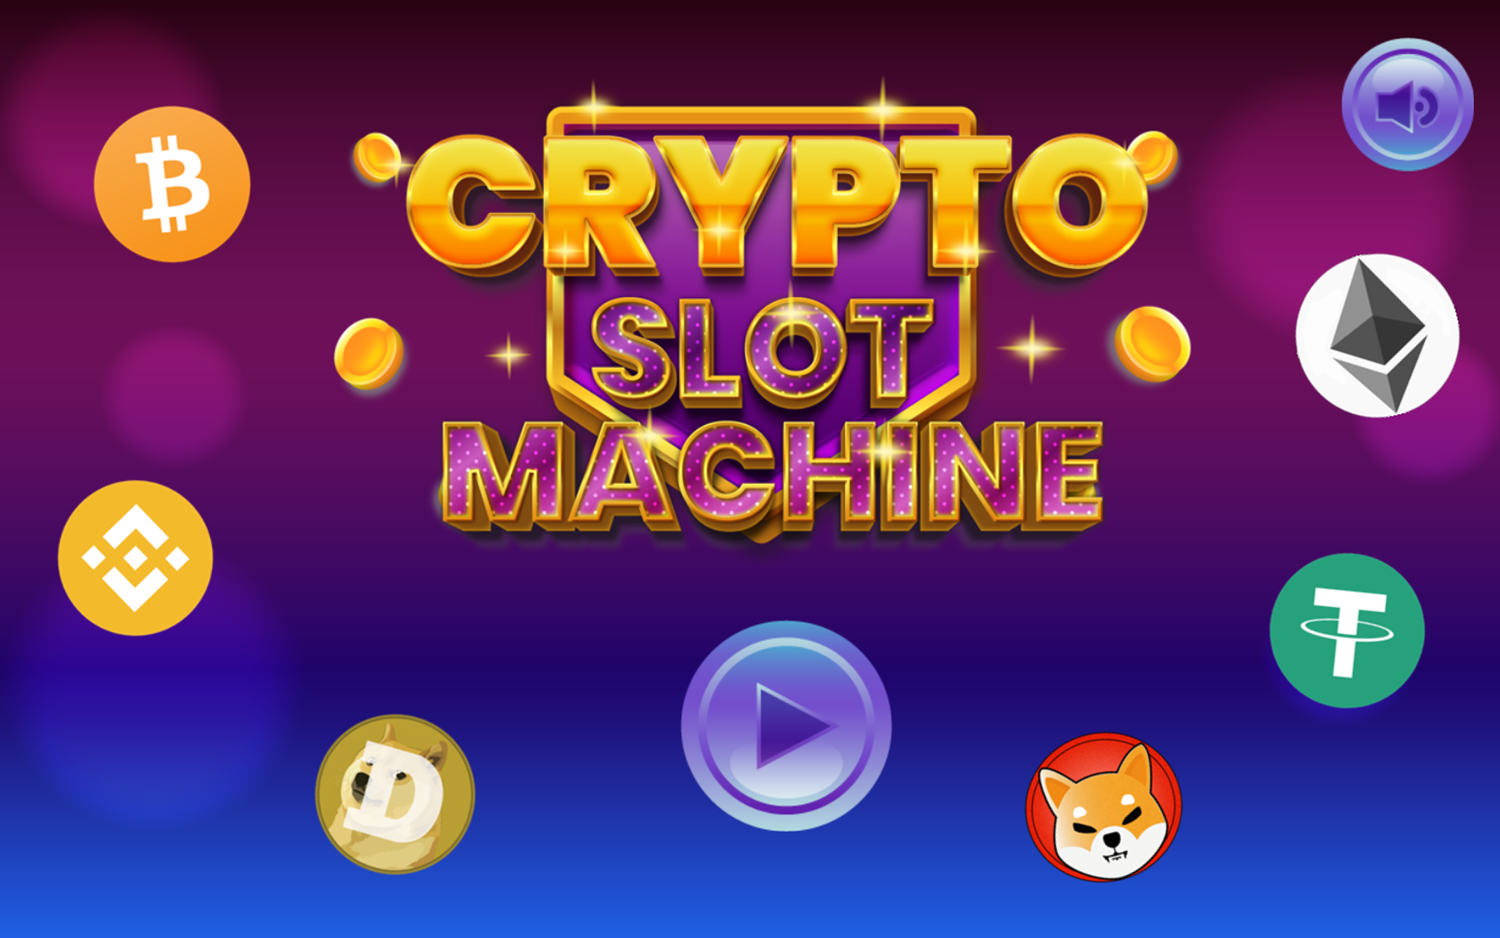 Crypto Slot Machine Game Welcome Screen Screenshot.